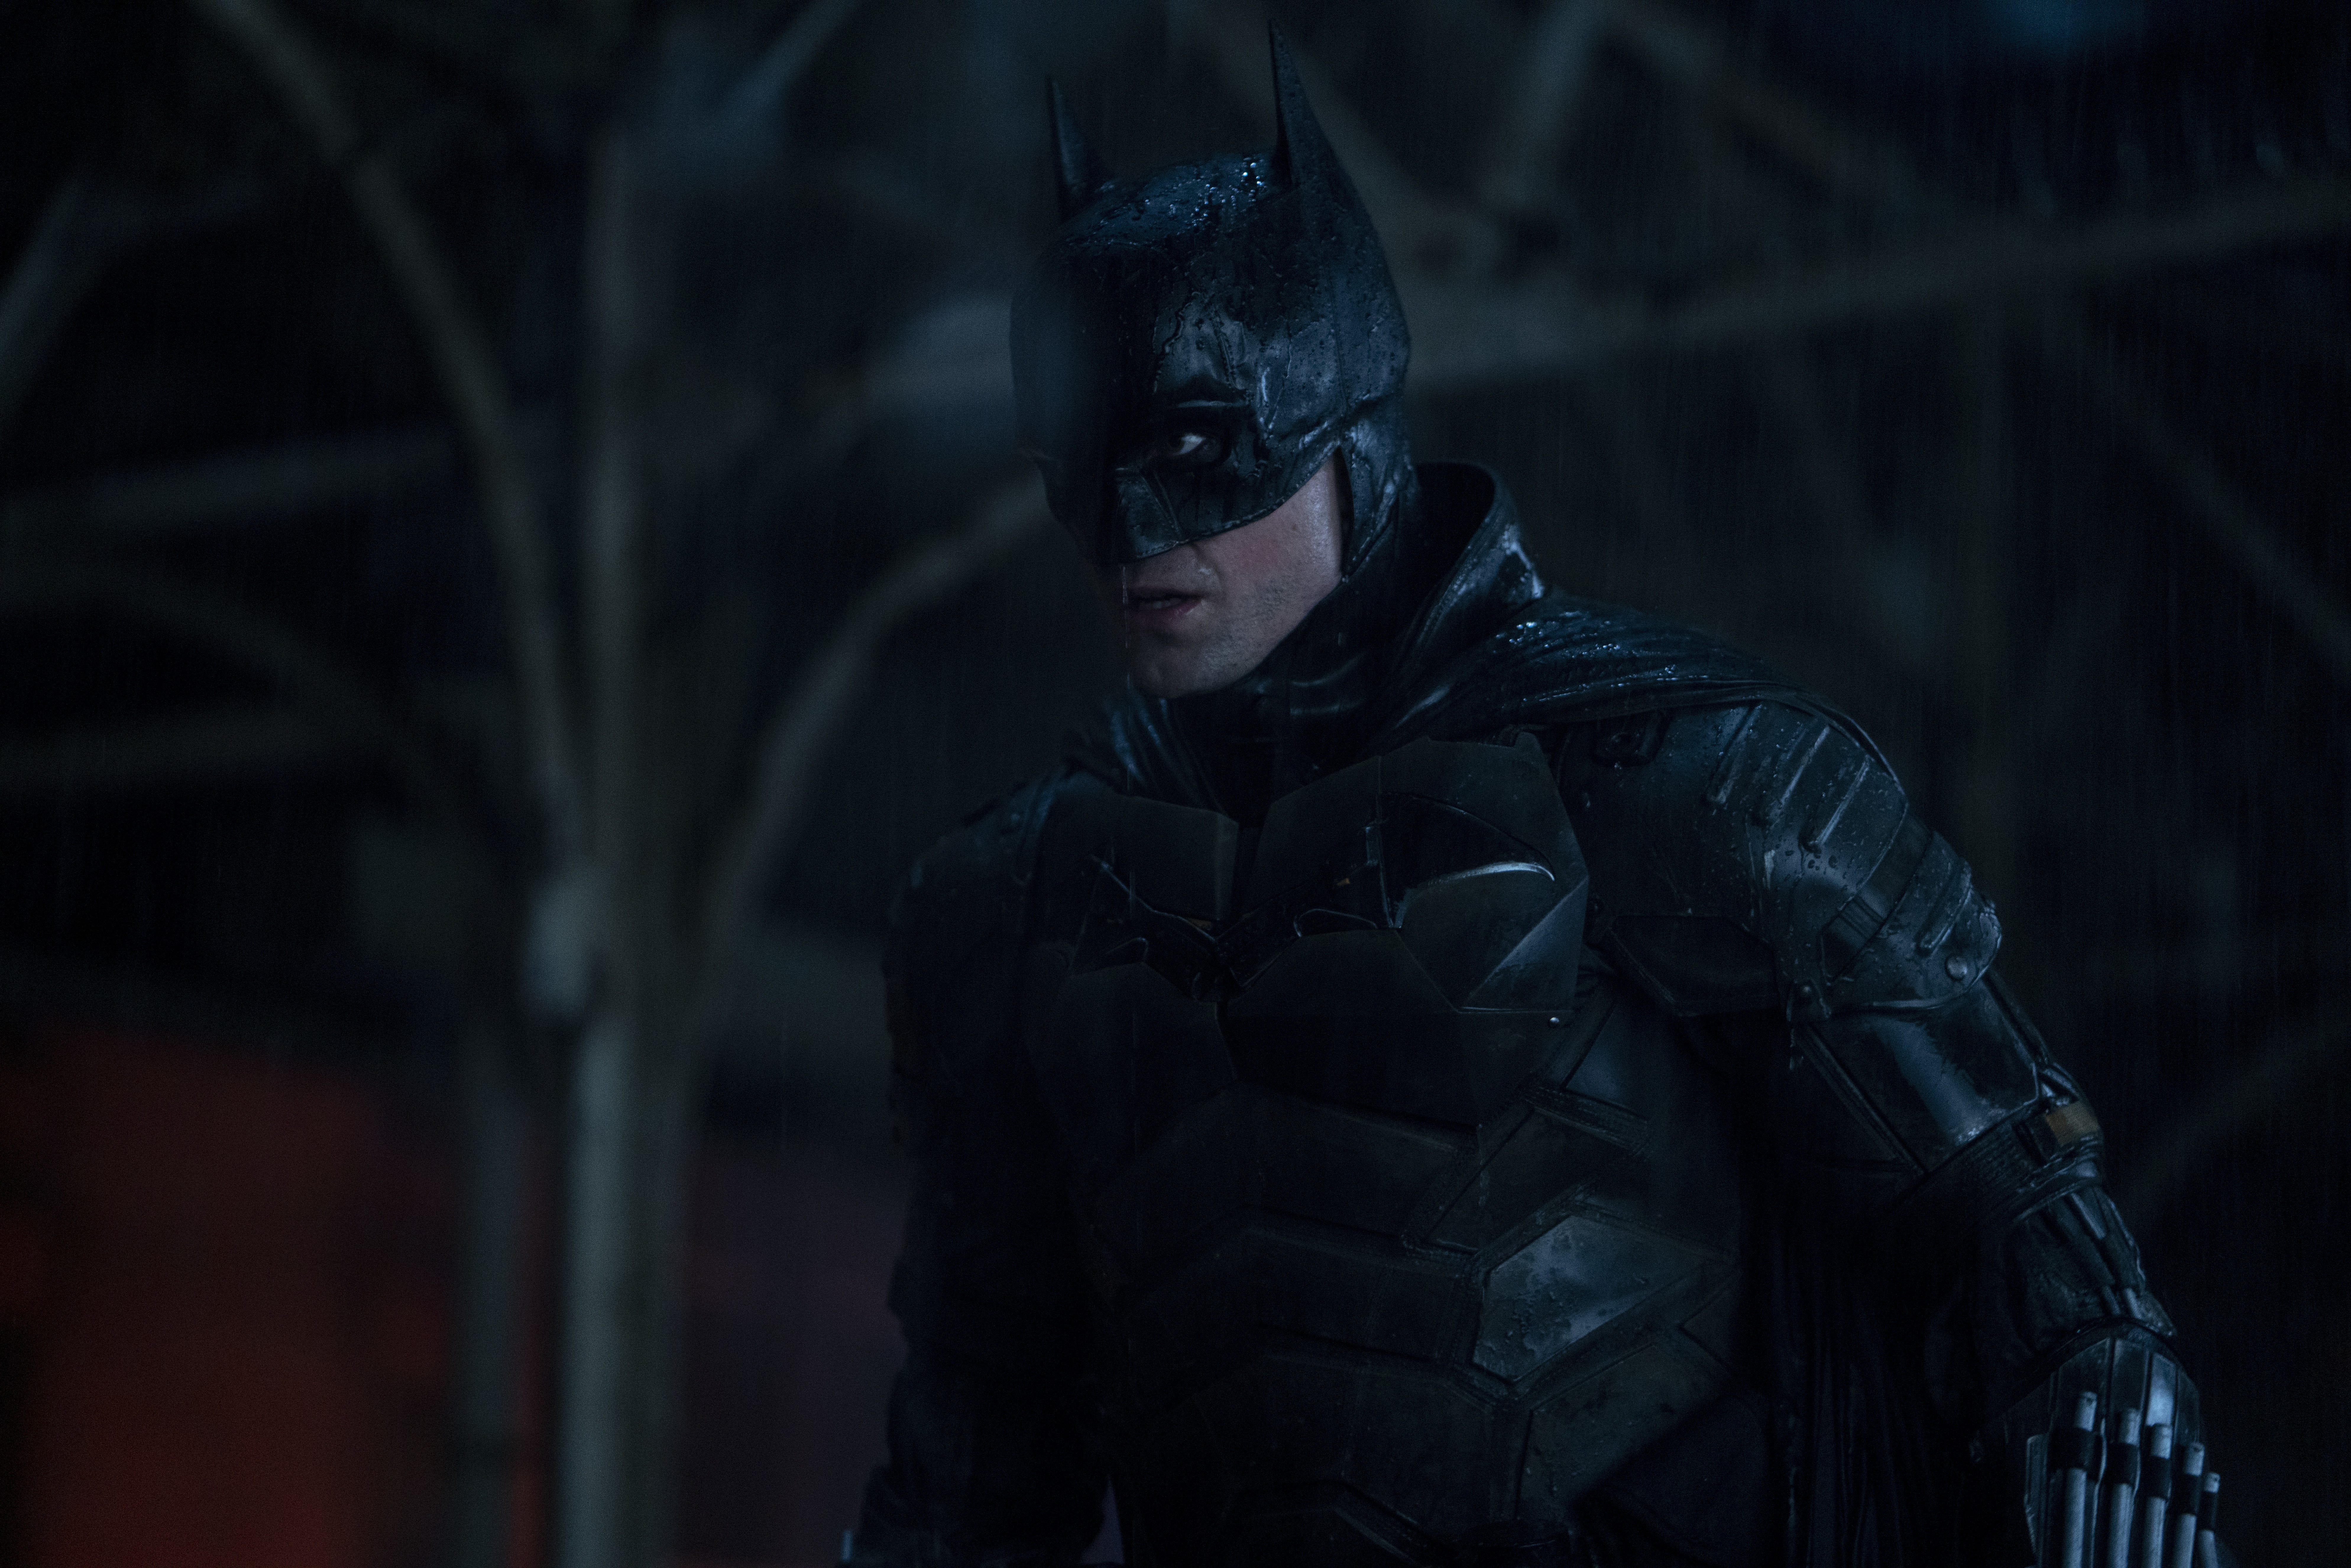 Robert Pattinson is the Batman. Who else played Bruce Wayne?